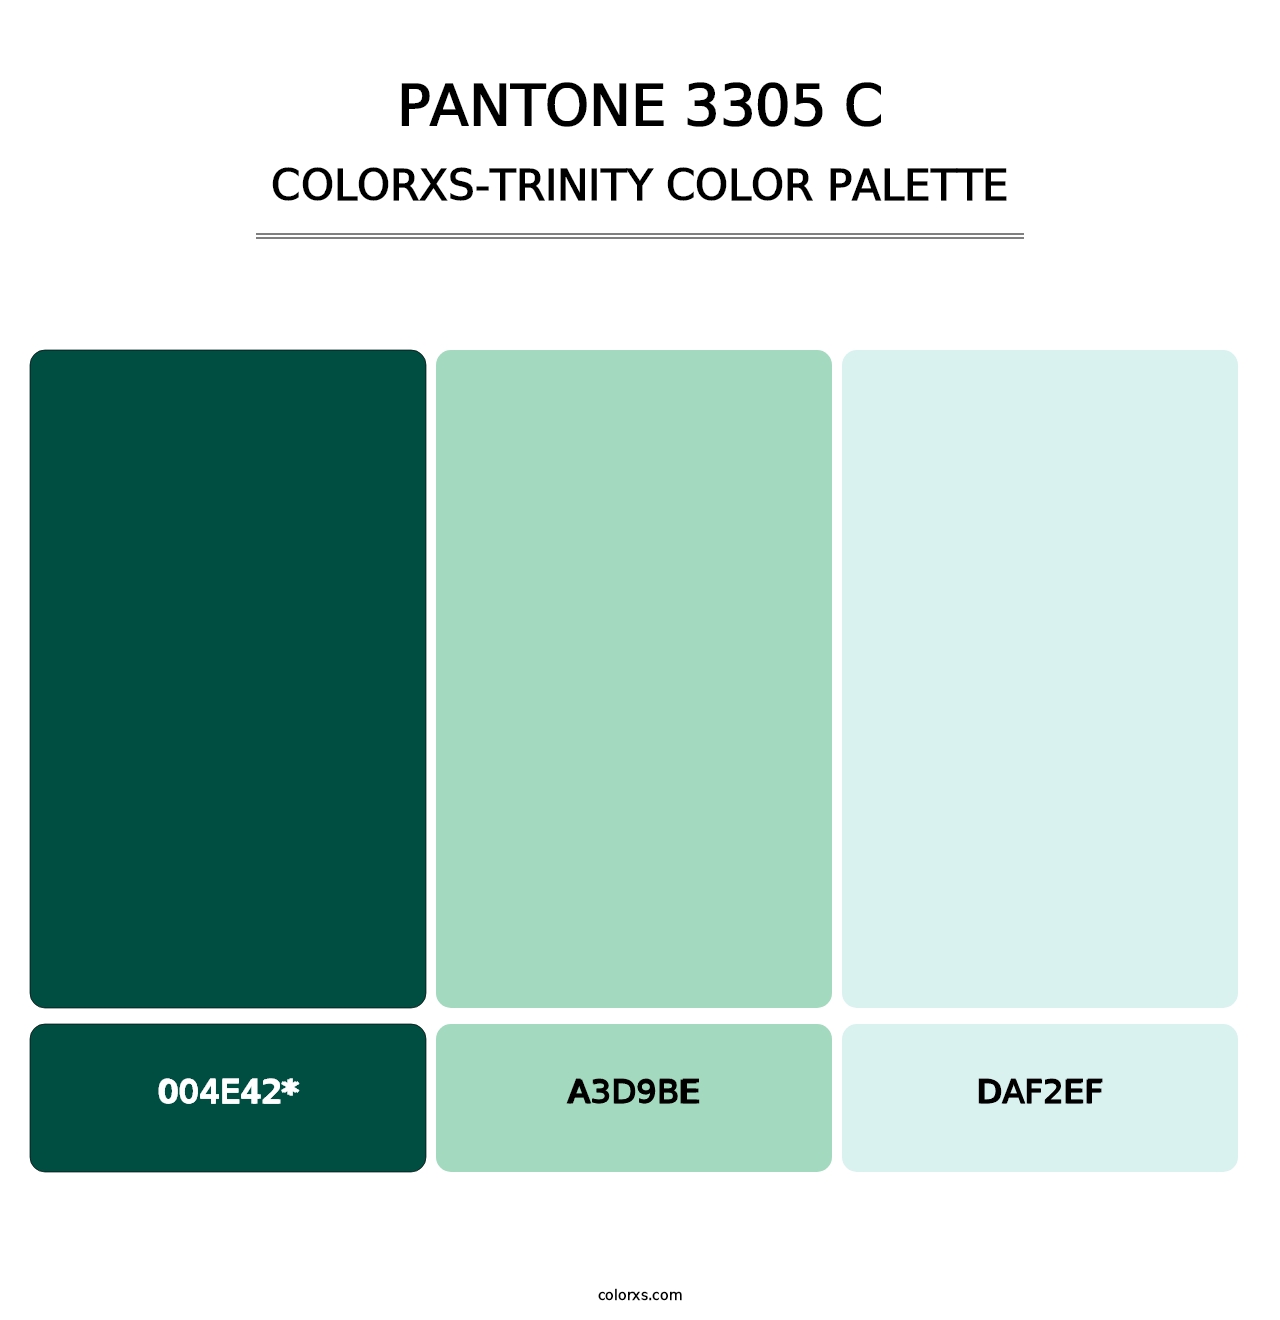 PANTONE 3305 C - Colorxs Trinity Palette